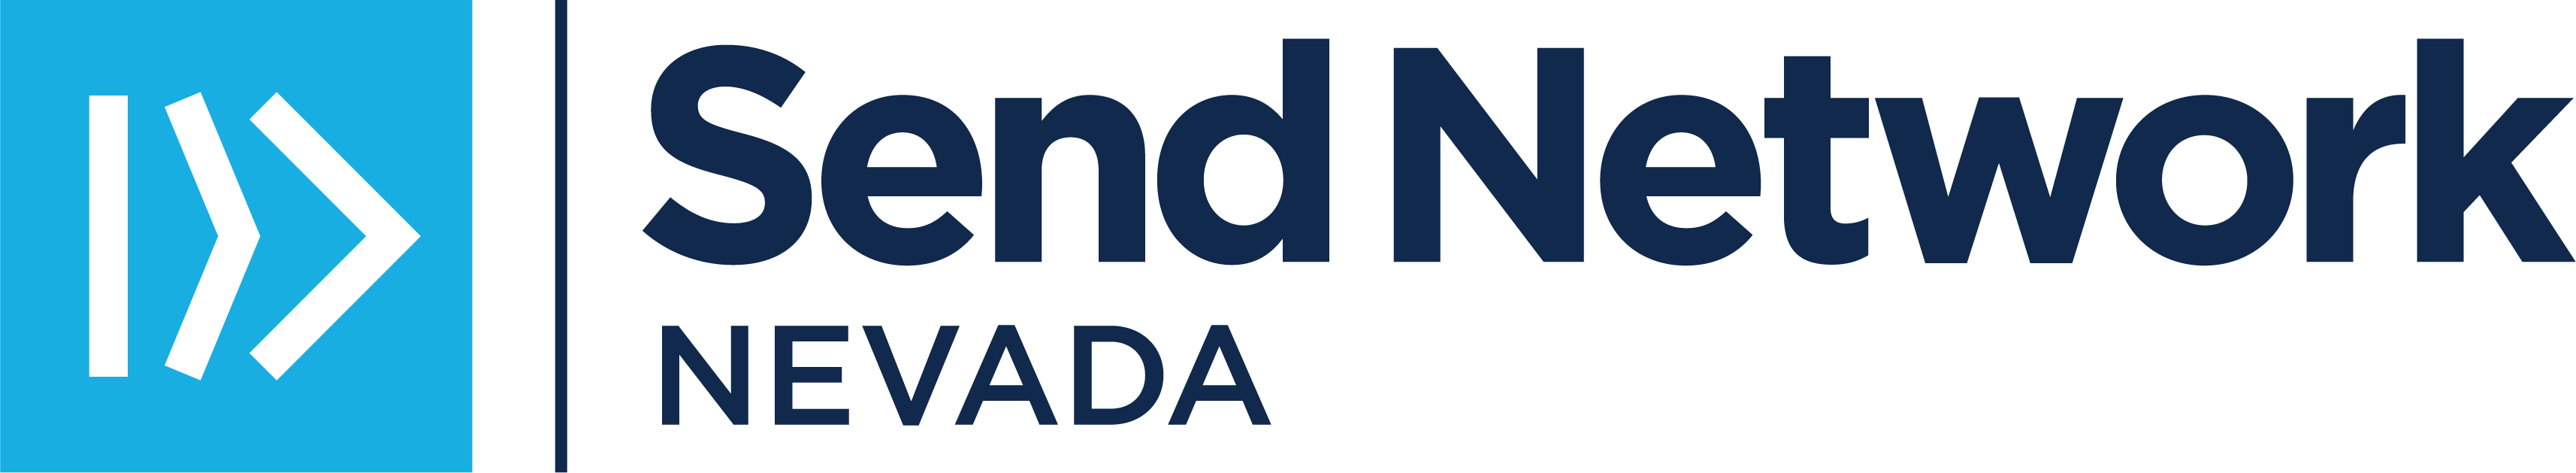 SN Nevada Logo_BlueNavy